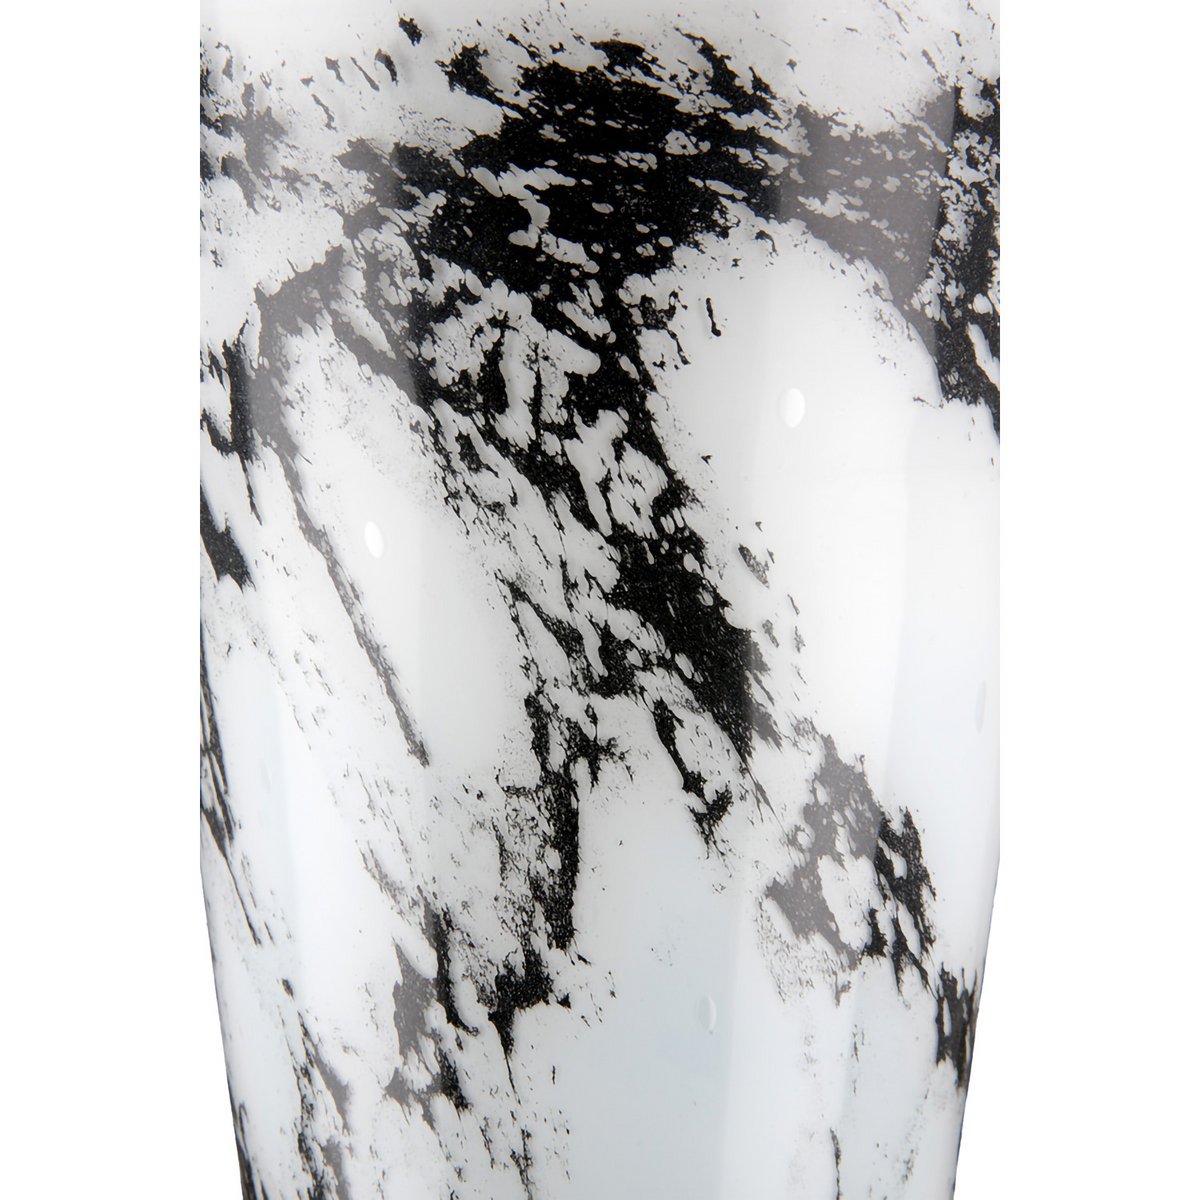 Vase, Blumenvase, Pokal TROPHY in Marmoroptik, aus Glas